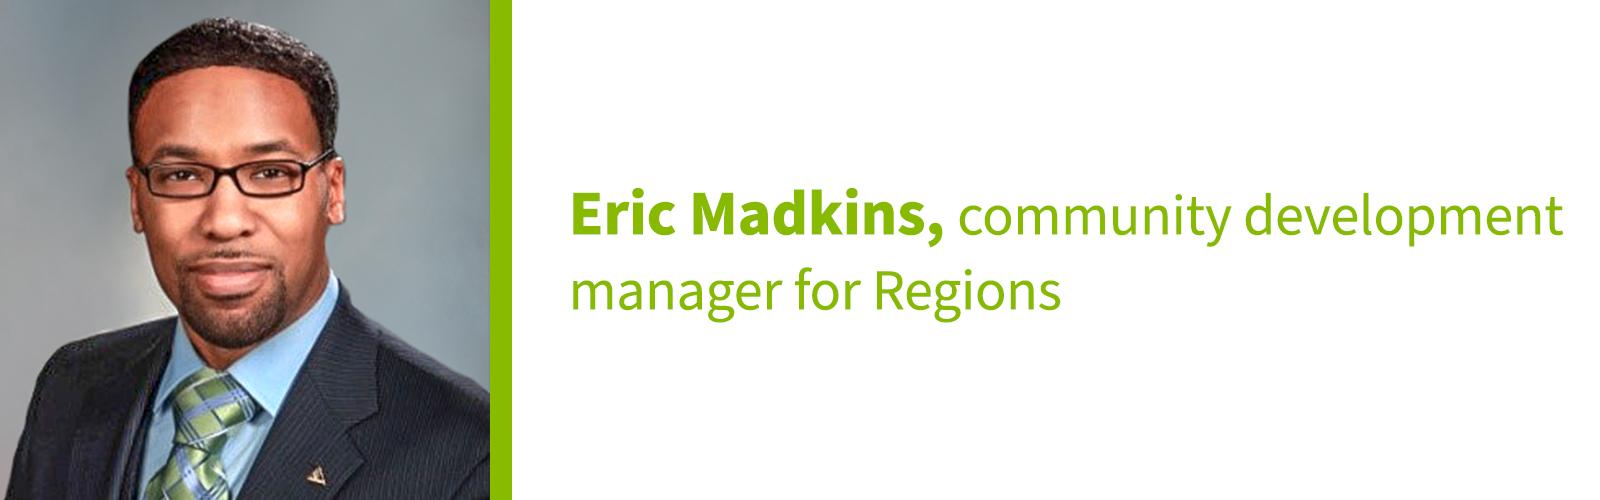 Eric Madkins, community development manager for Regions